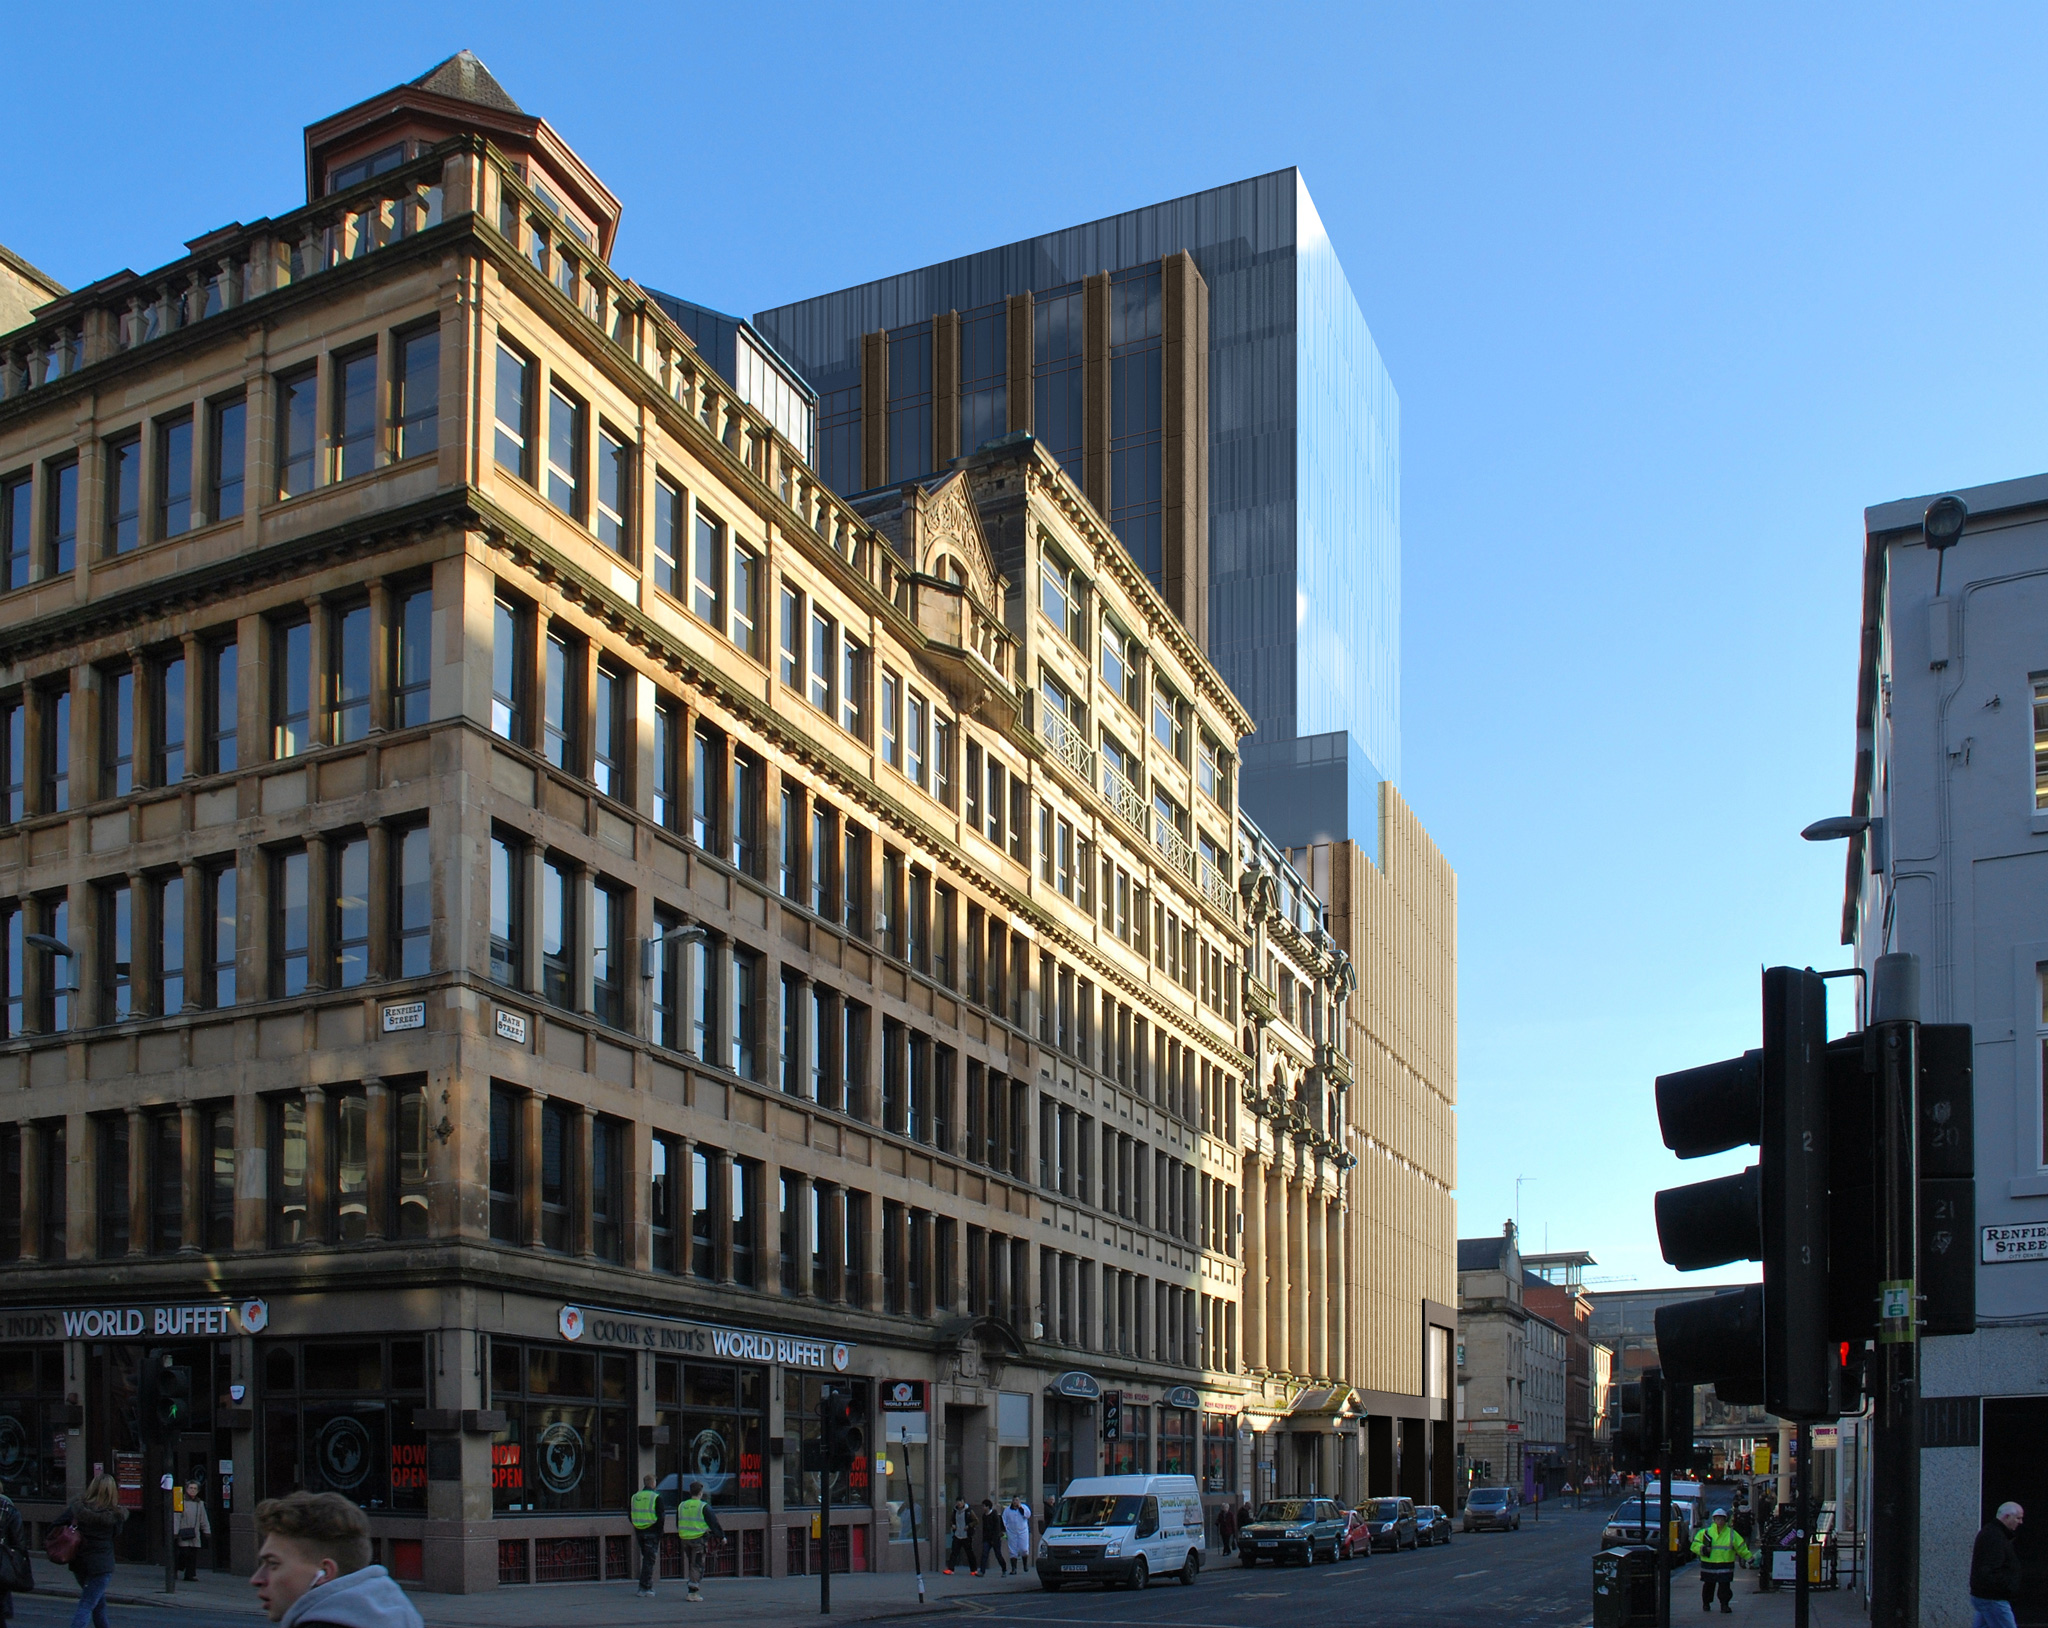 Glasgow approves 3DReid’s hotel plan at West Nile Street